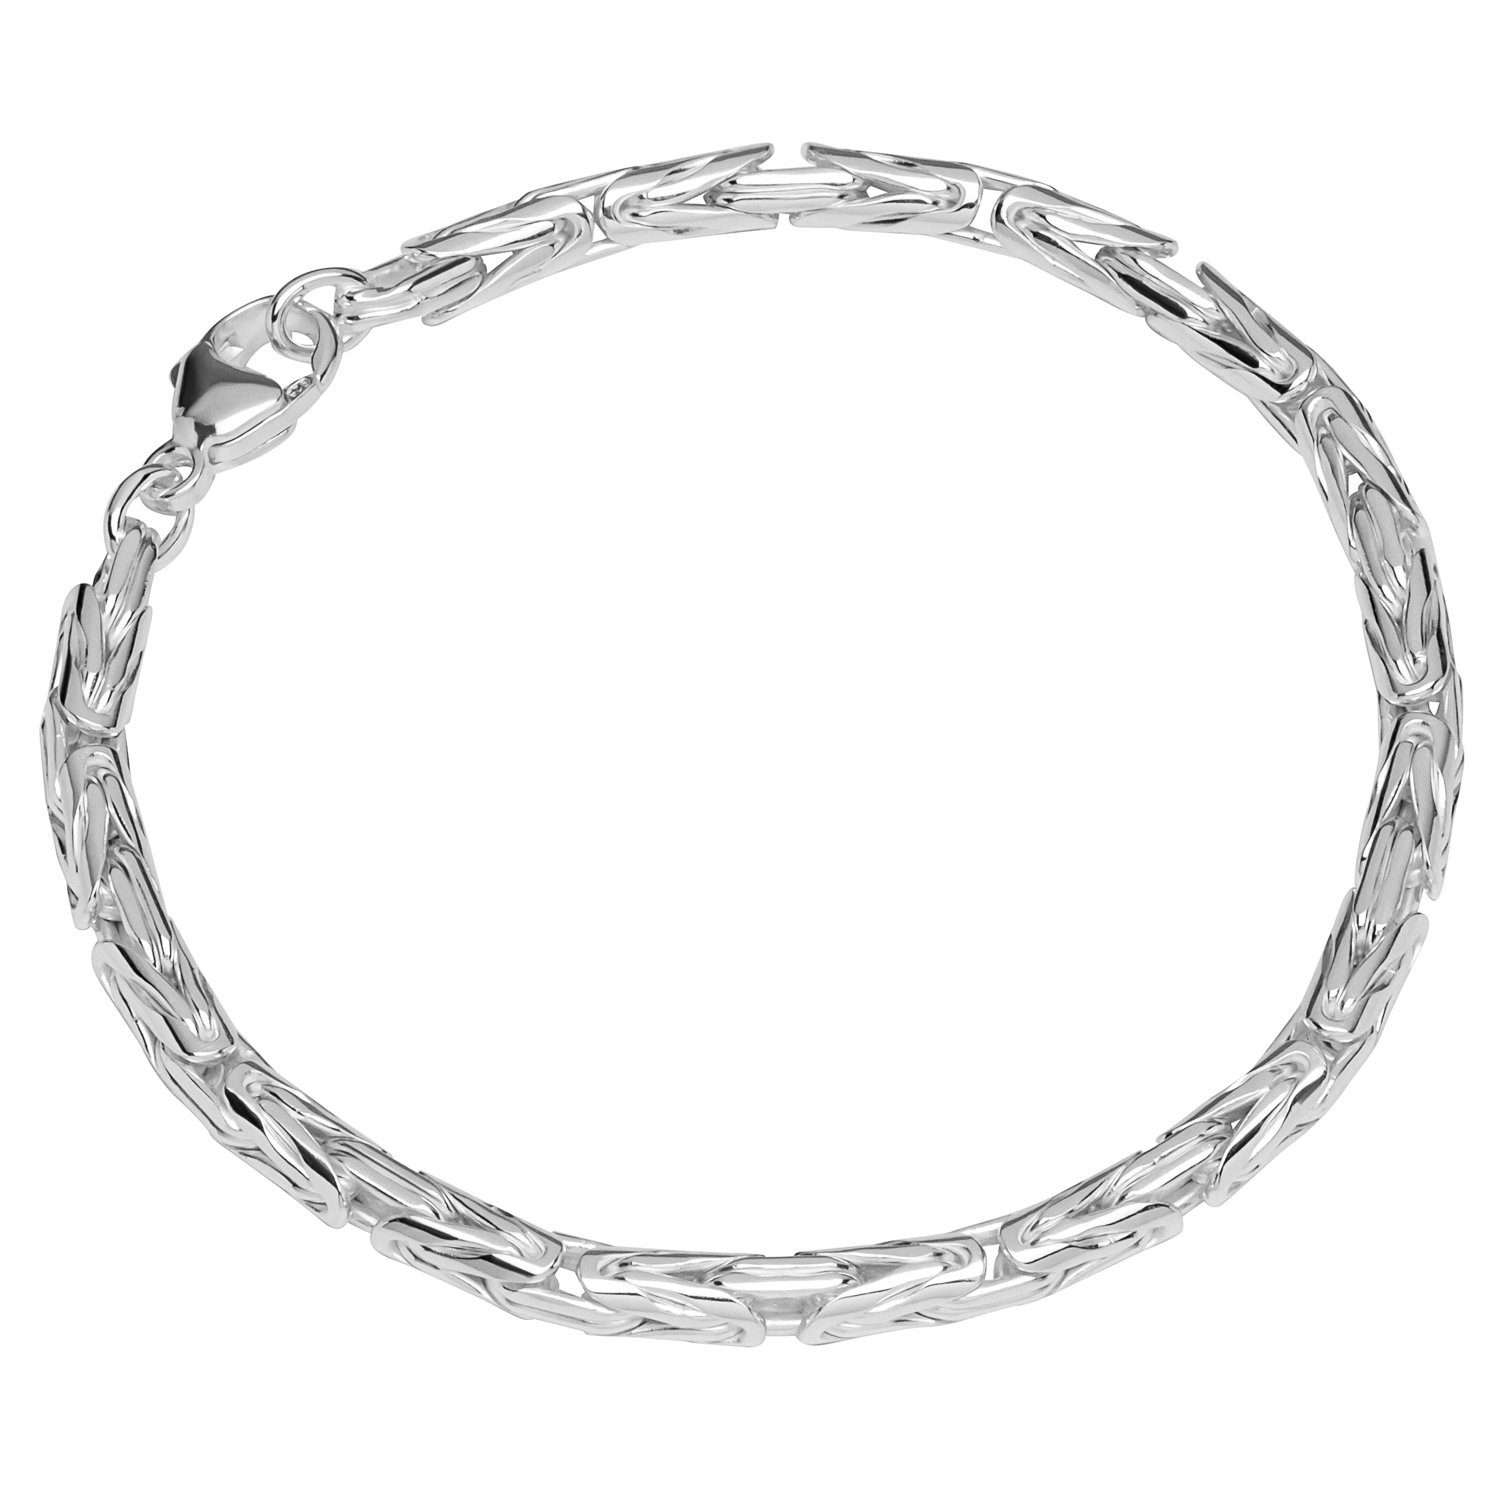 NKlaus Silberarmband Armband 925 Sterling Silber 19cm Königskette oval (1 Stück), Made in Germany